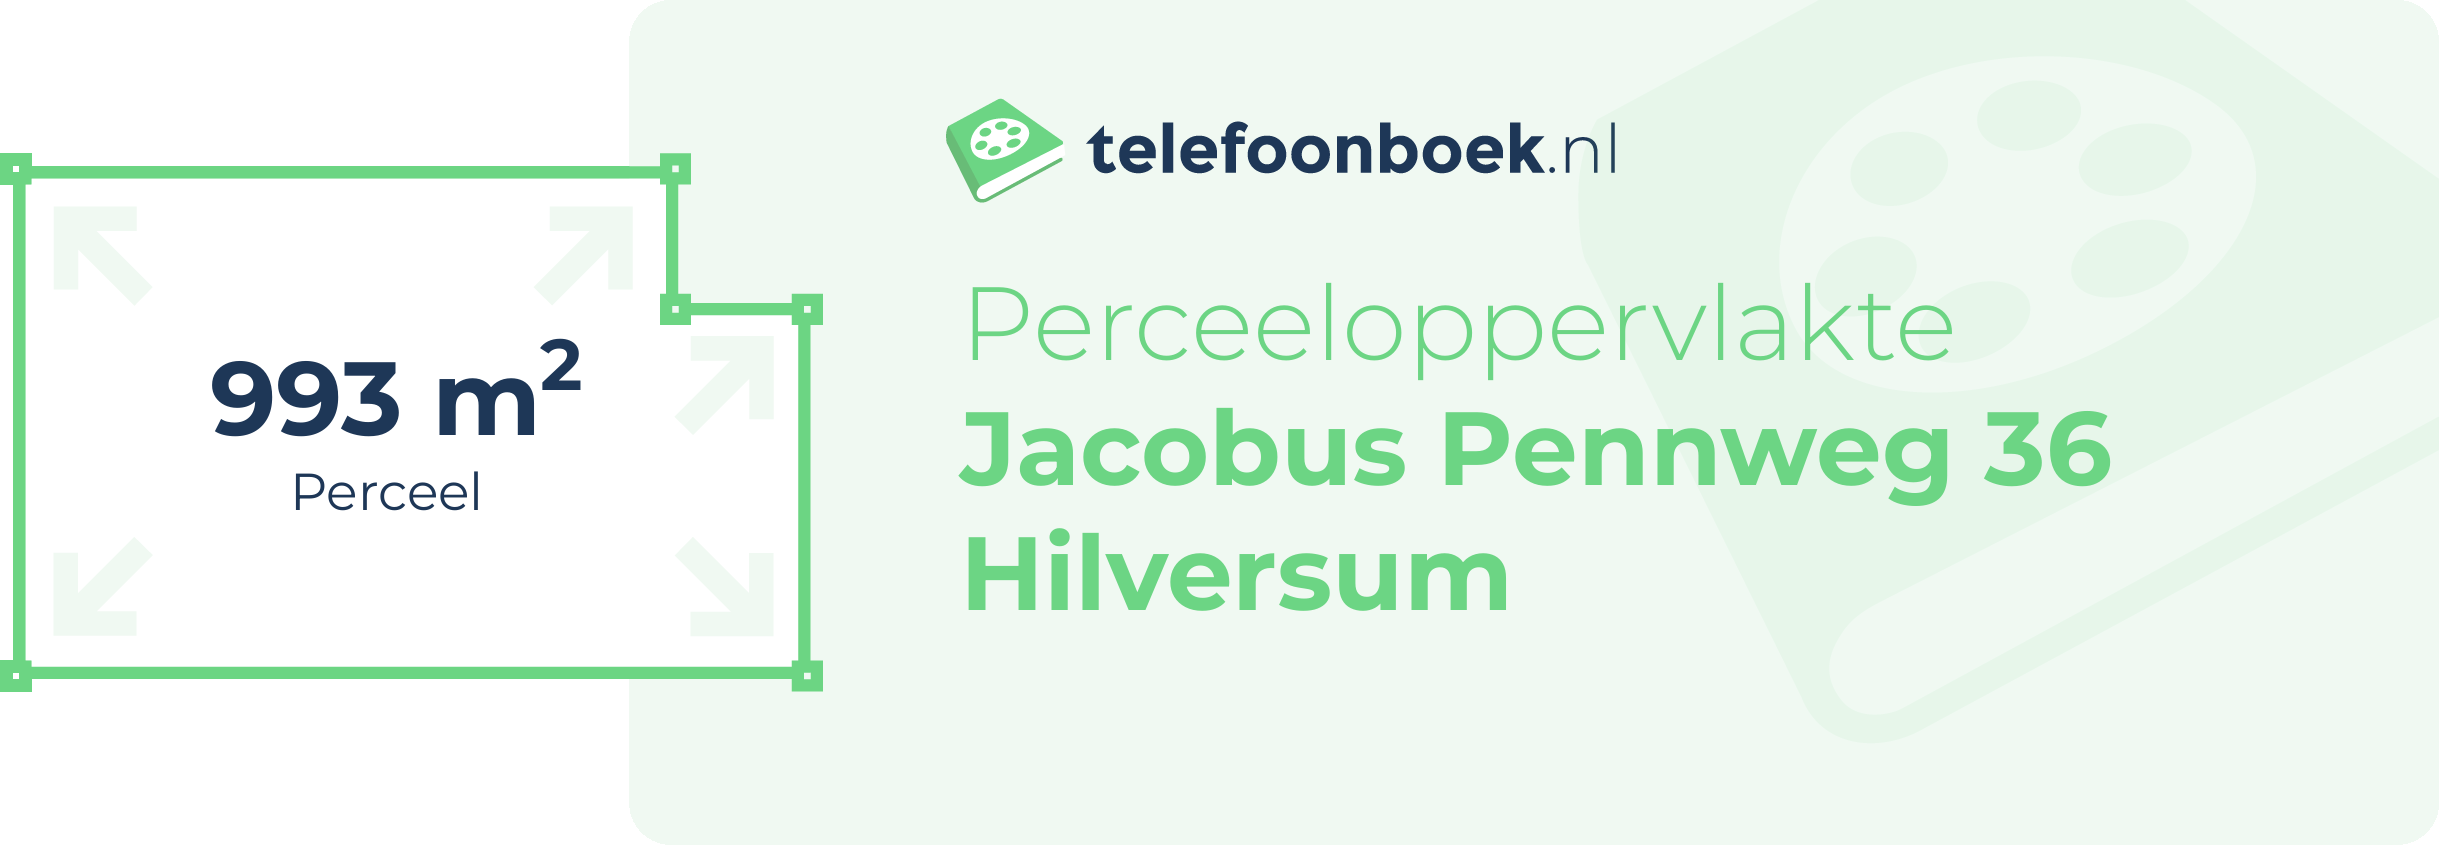 Perceeloppervlakte Jacobus Pennweg 36 Hilversum